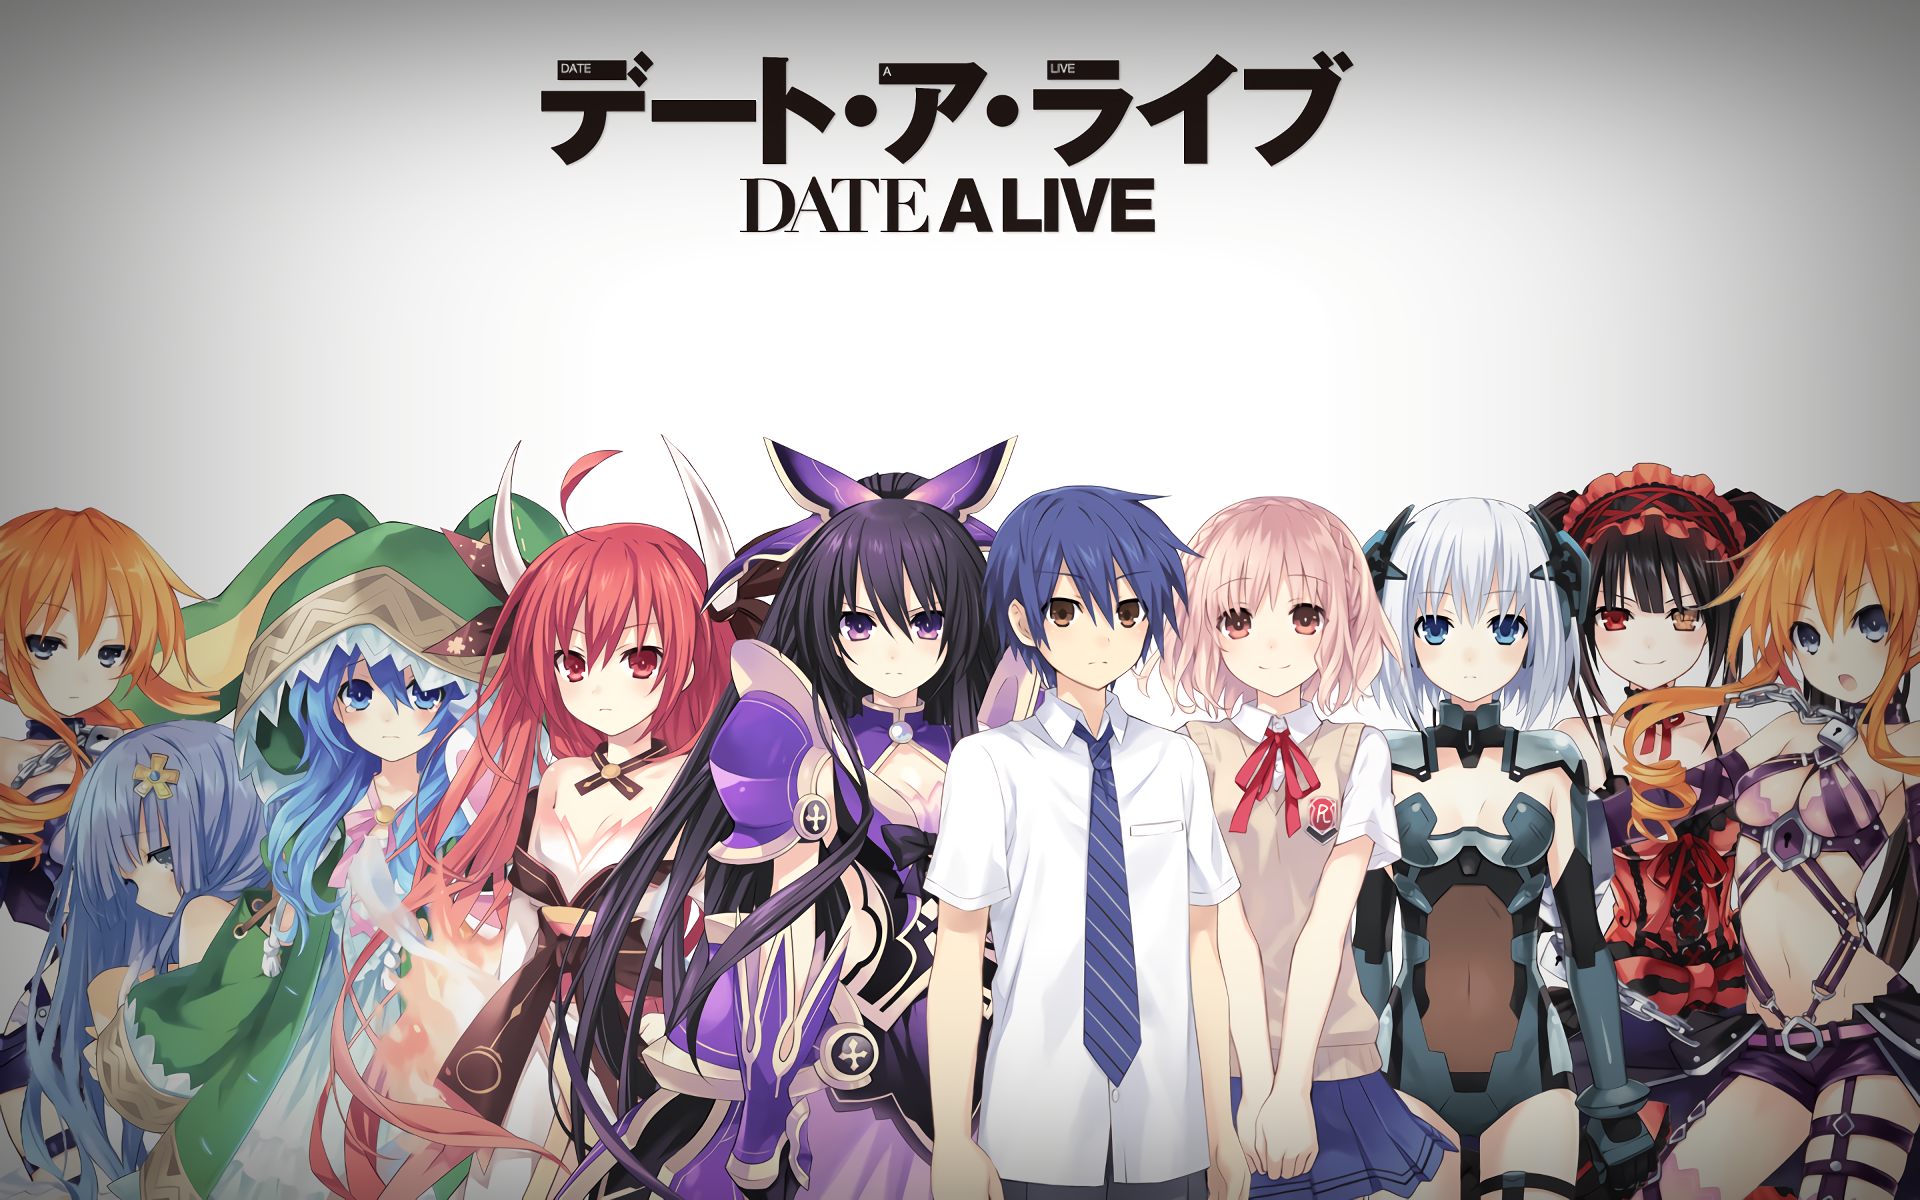 Date a Live - Anime